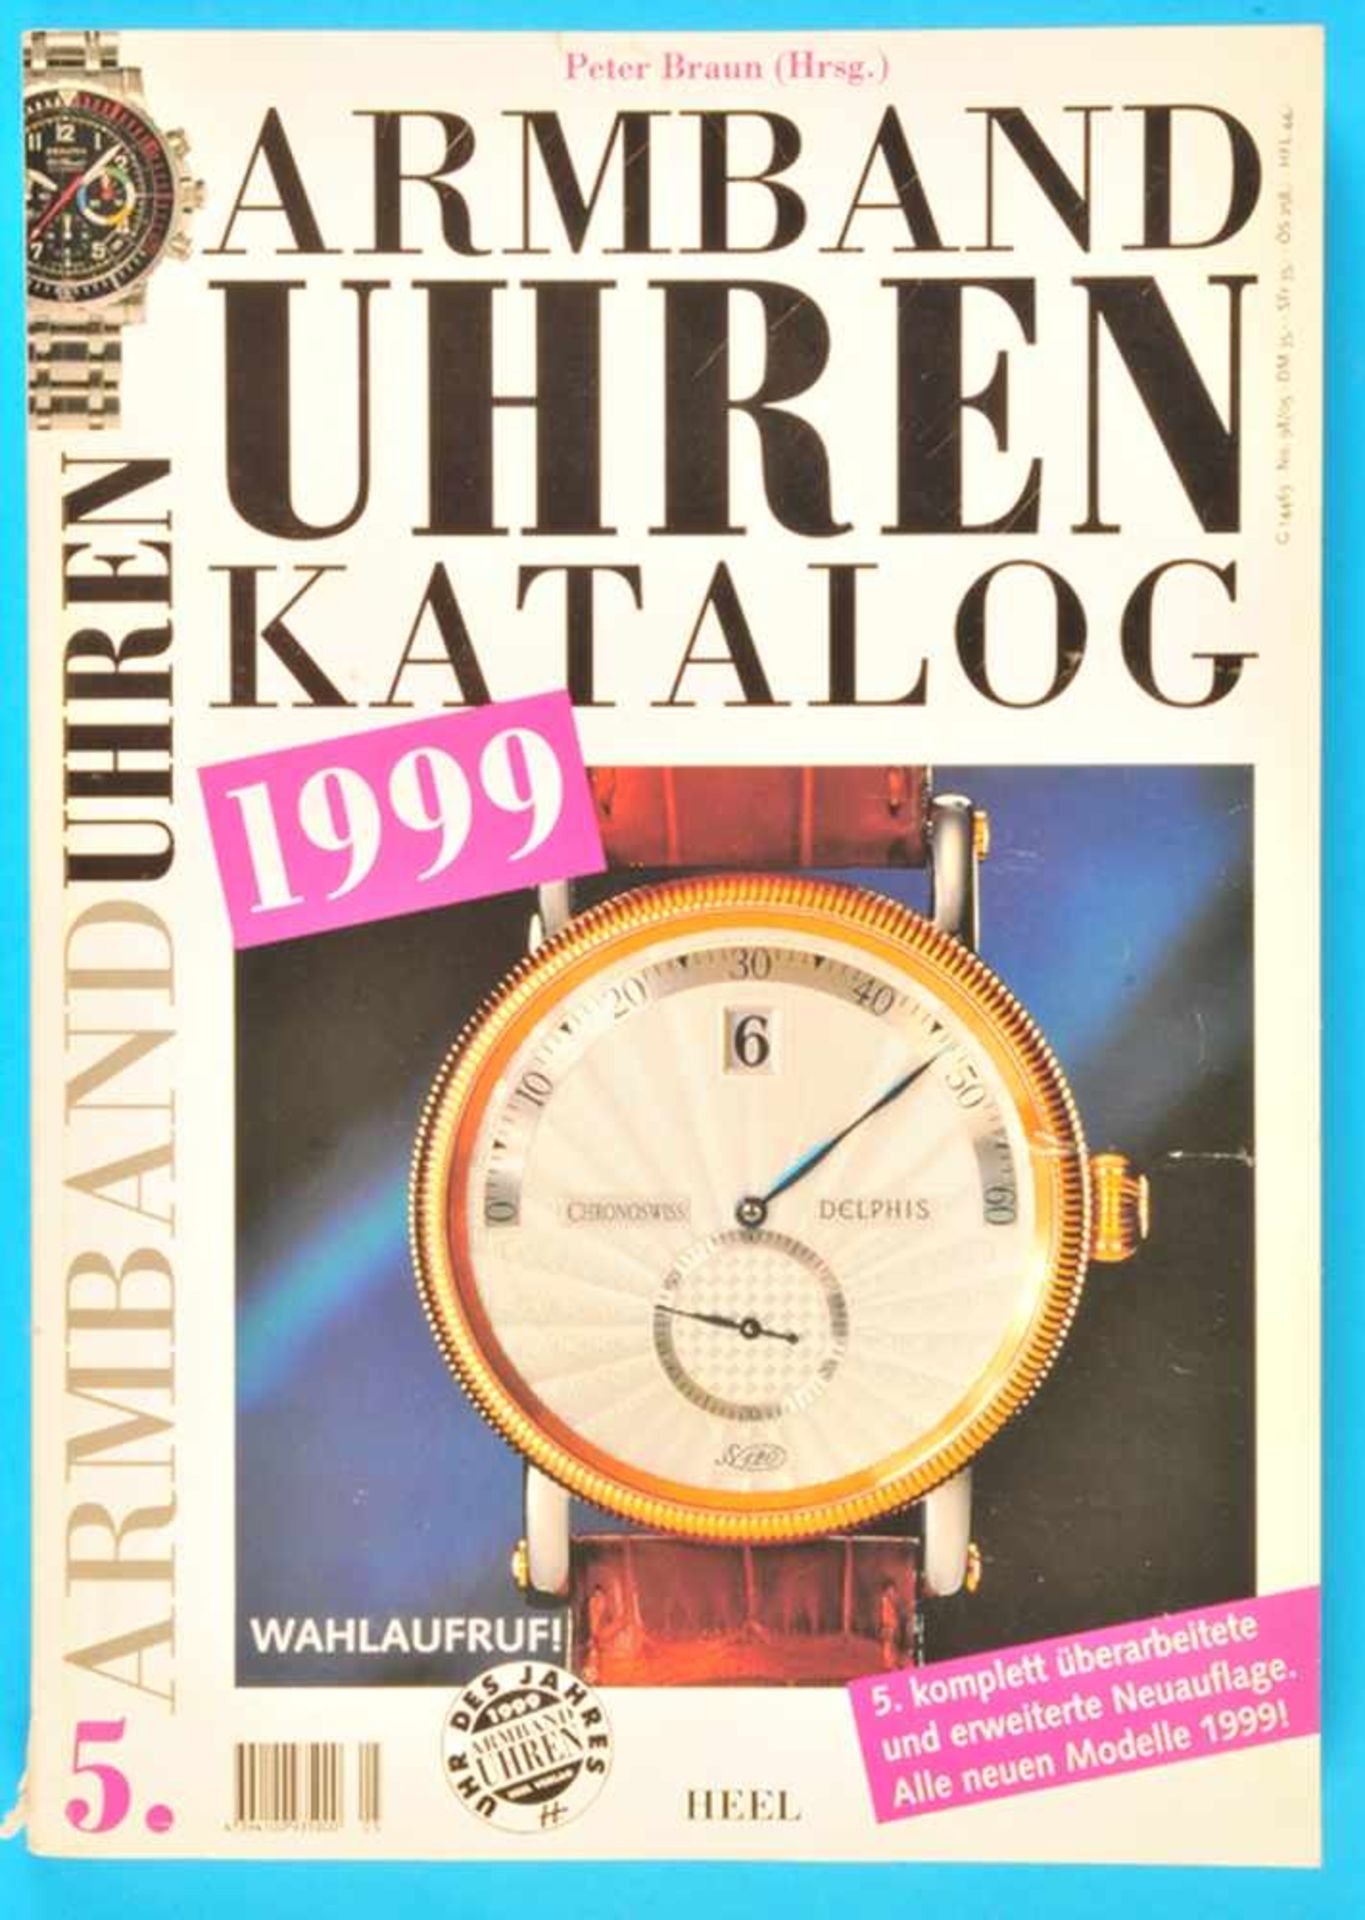 Heel, Armbanduhren-Katalog 1999, 416 Seiten, Großformat (5747)Heel, Armbanduhren-Katalog 1999, 416